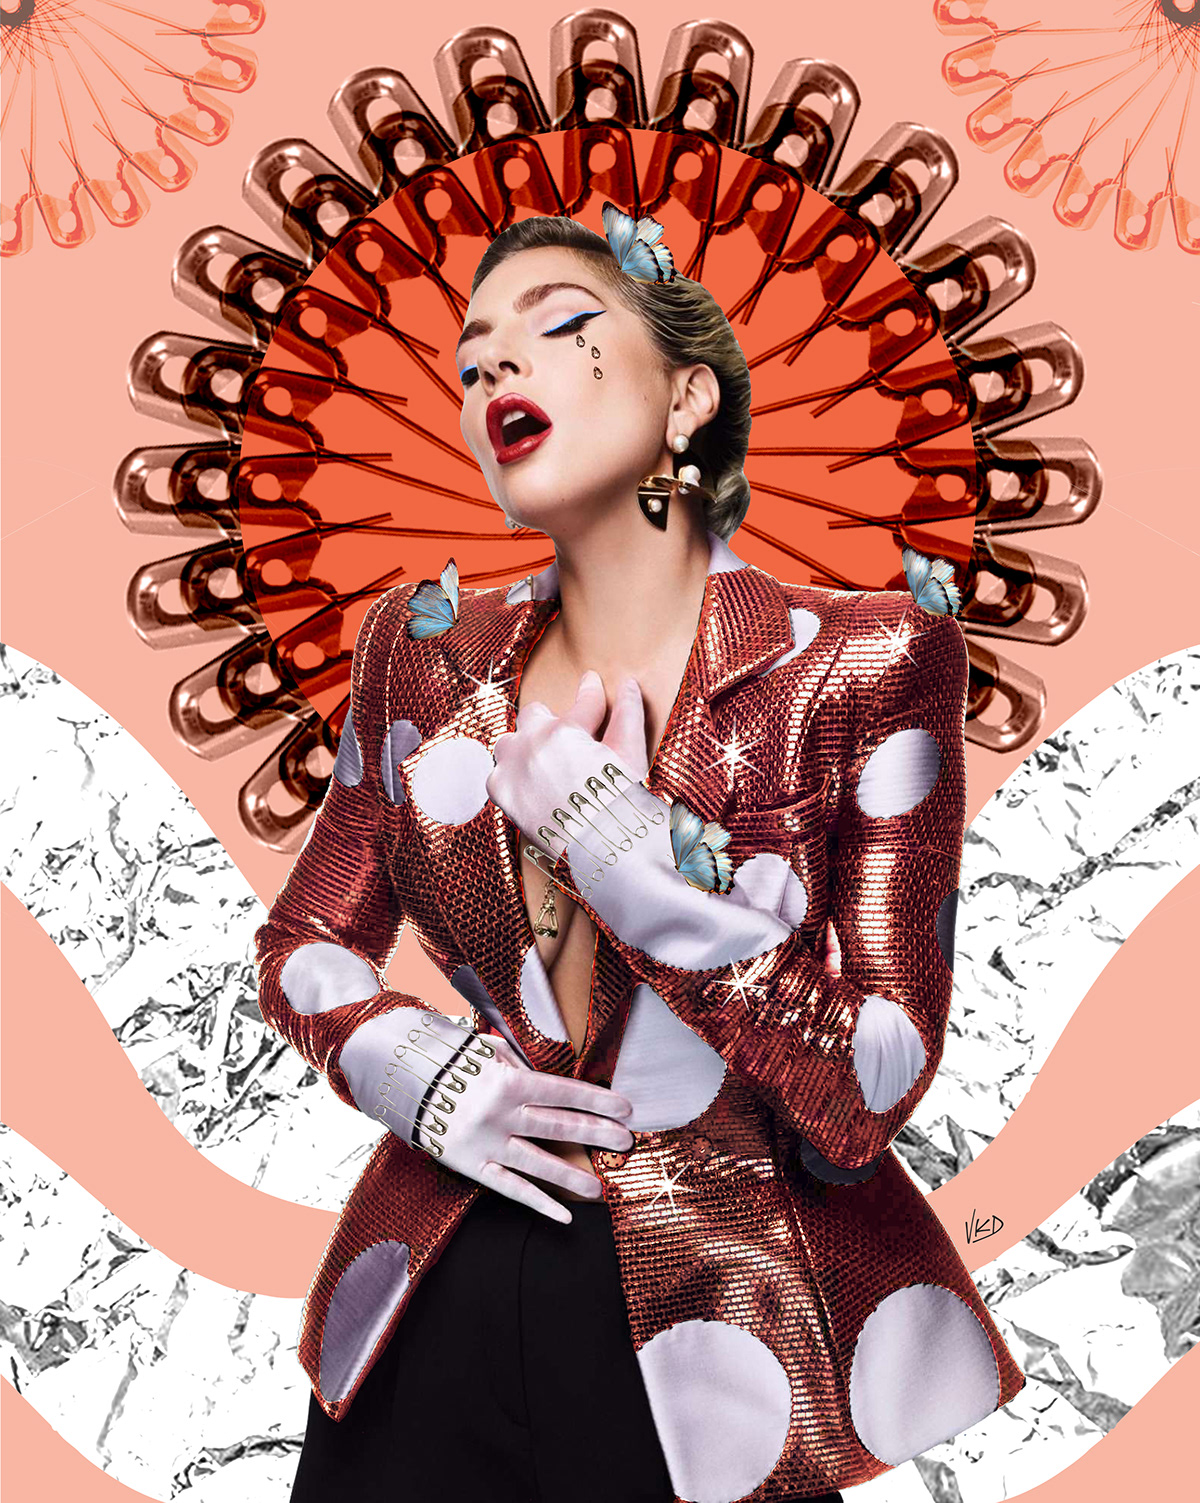 Collage/poster design - Lady Gaga